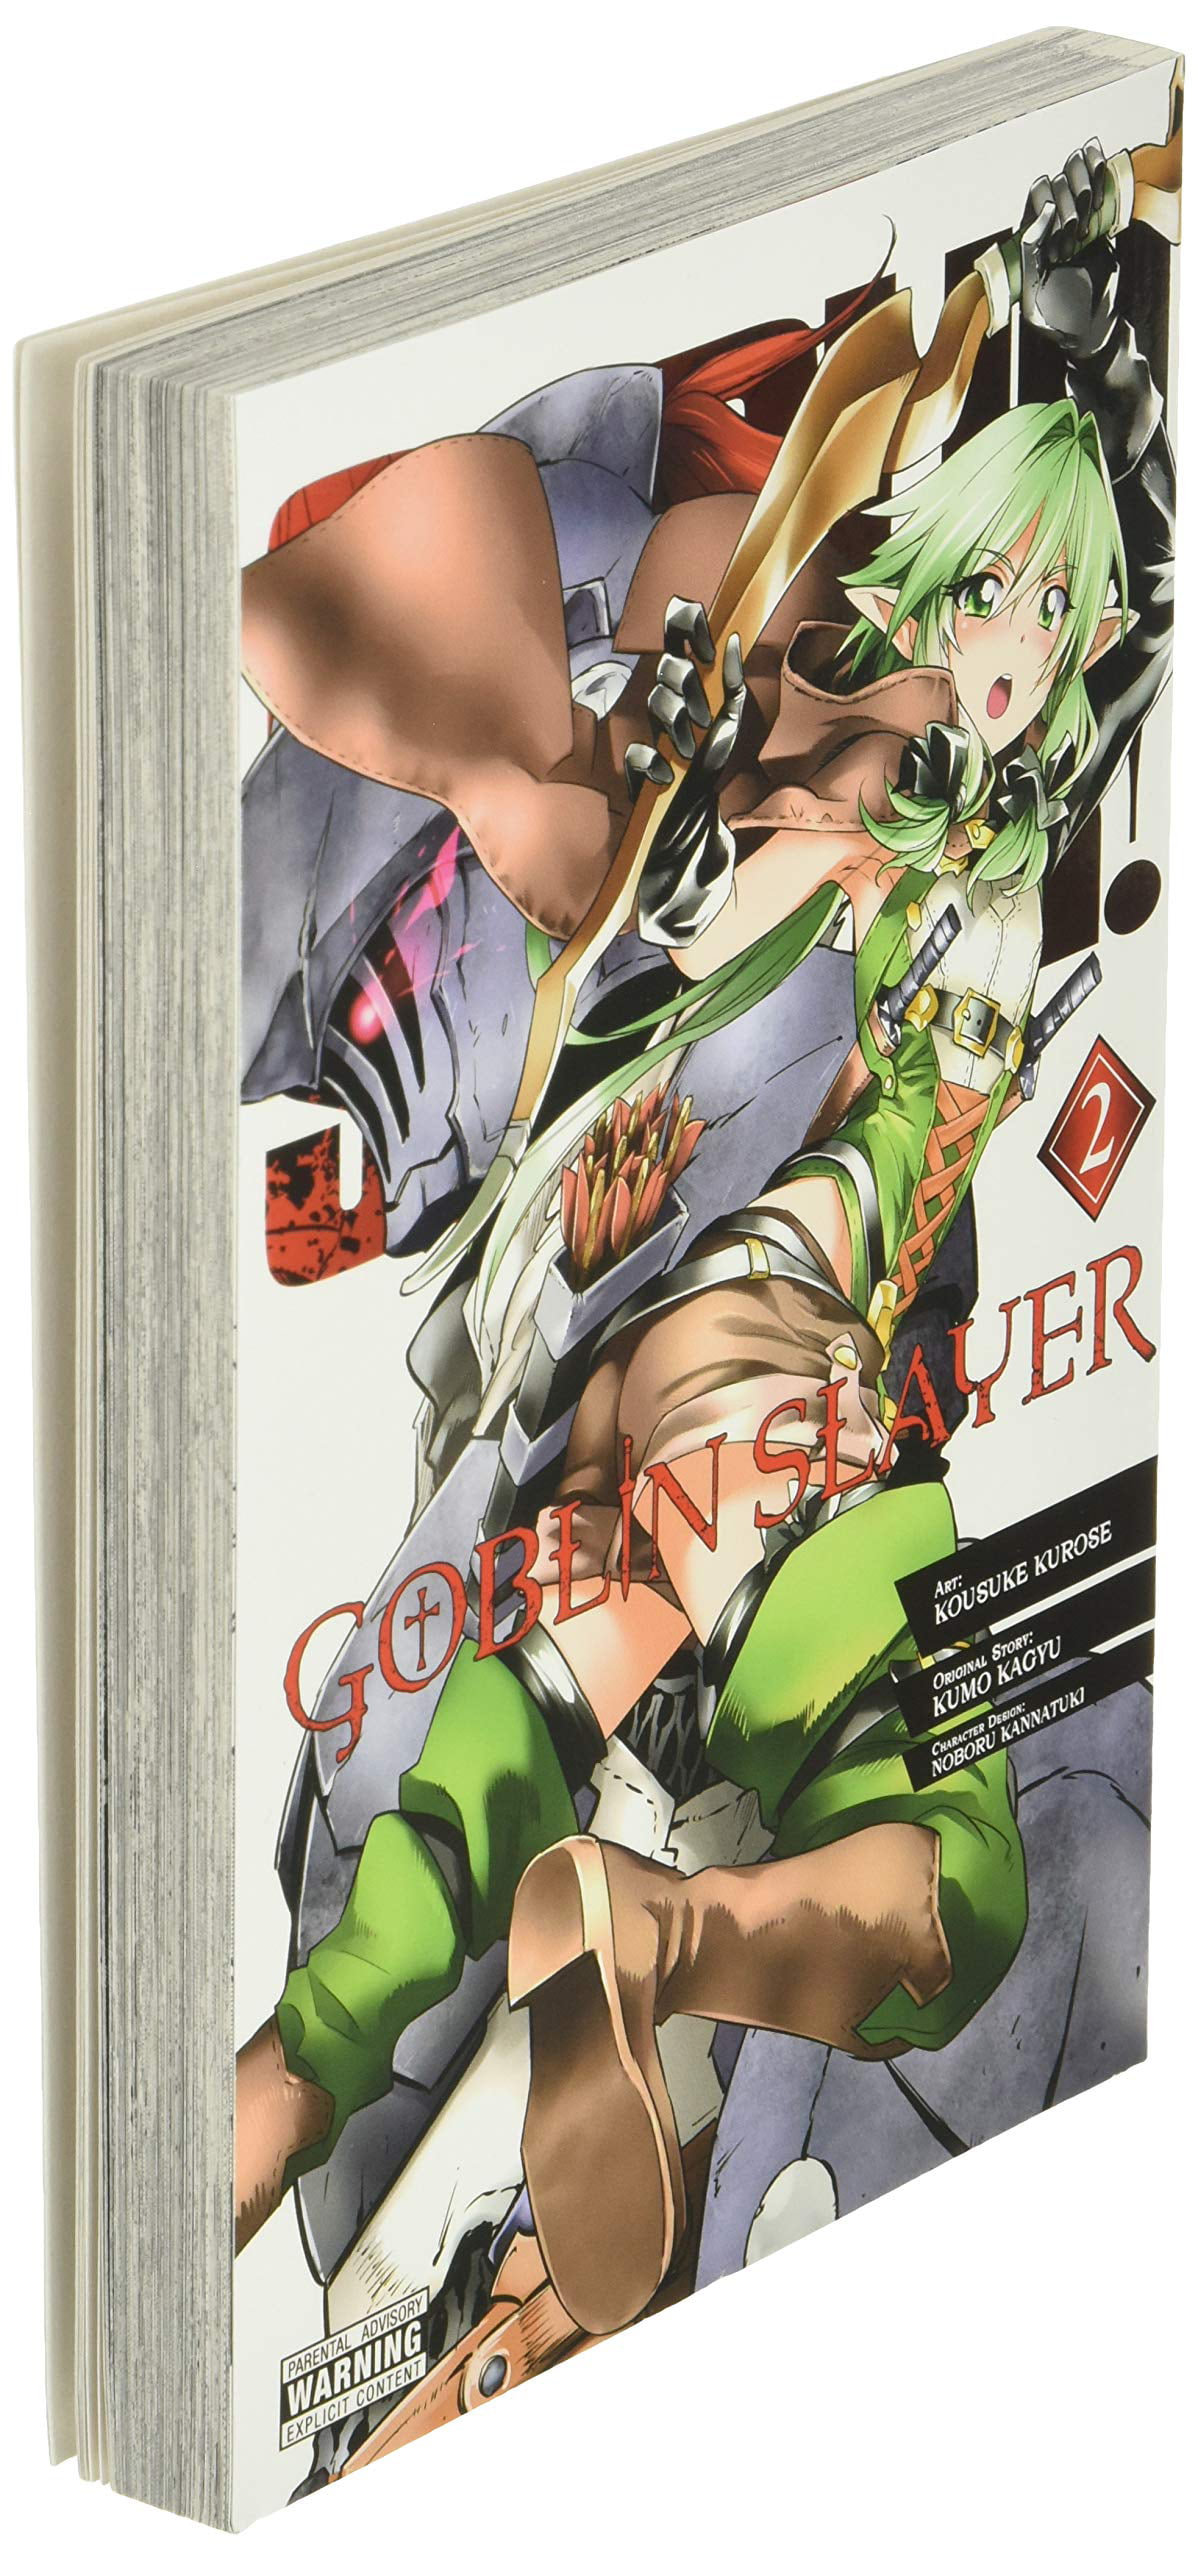 Goblin Slayer (Manga): Goblin 2 (Manga) #2) (Paperback) - Walmart.com